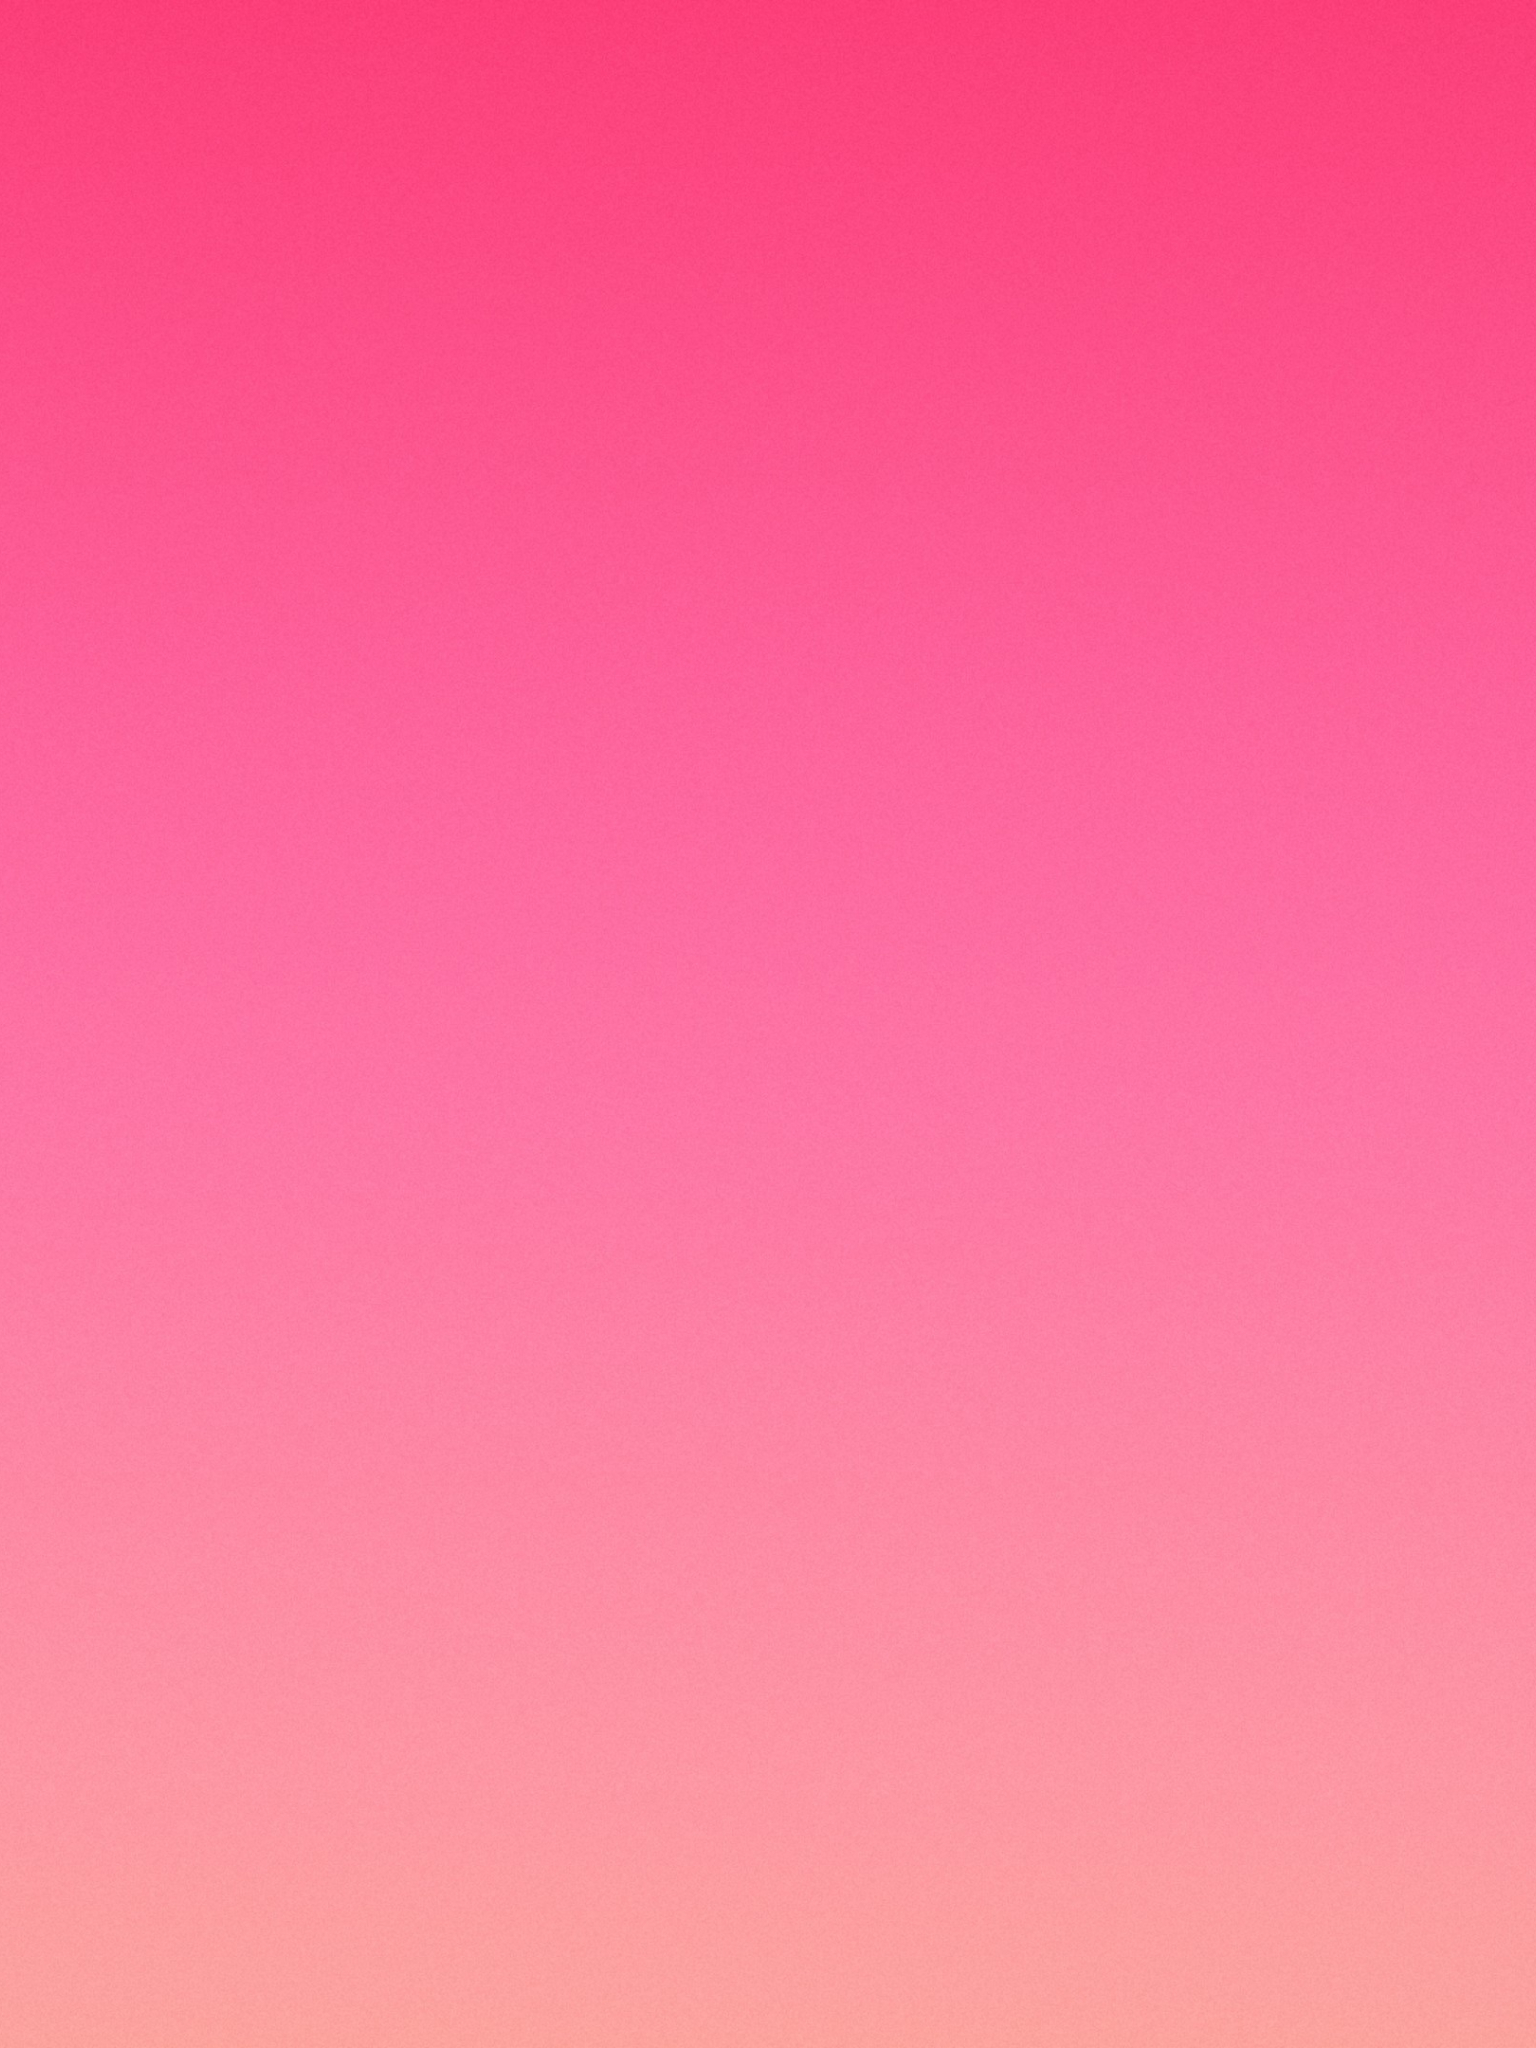 Free download 57 Plain Pink Wallpaper [3840x2160] for your Desktop, Mobile & Tablet. Explore Image of Pink Wallpaper. Free Pink Wallpaper, Pink Wallpaper Blog, Cool Love Pink Wallpaper